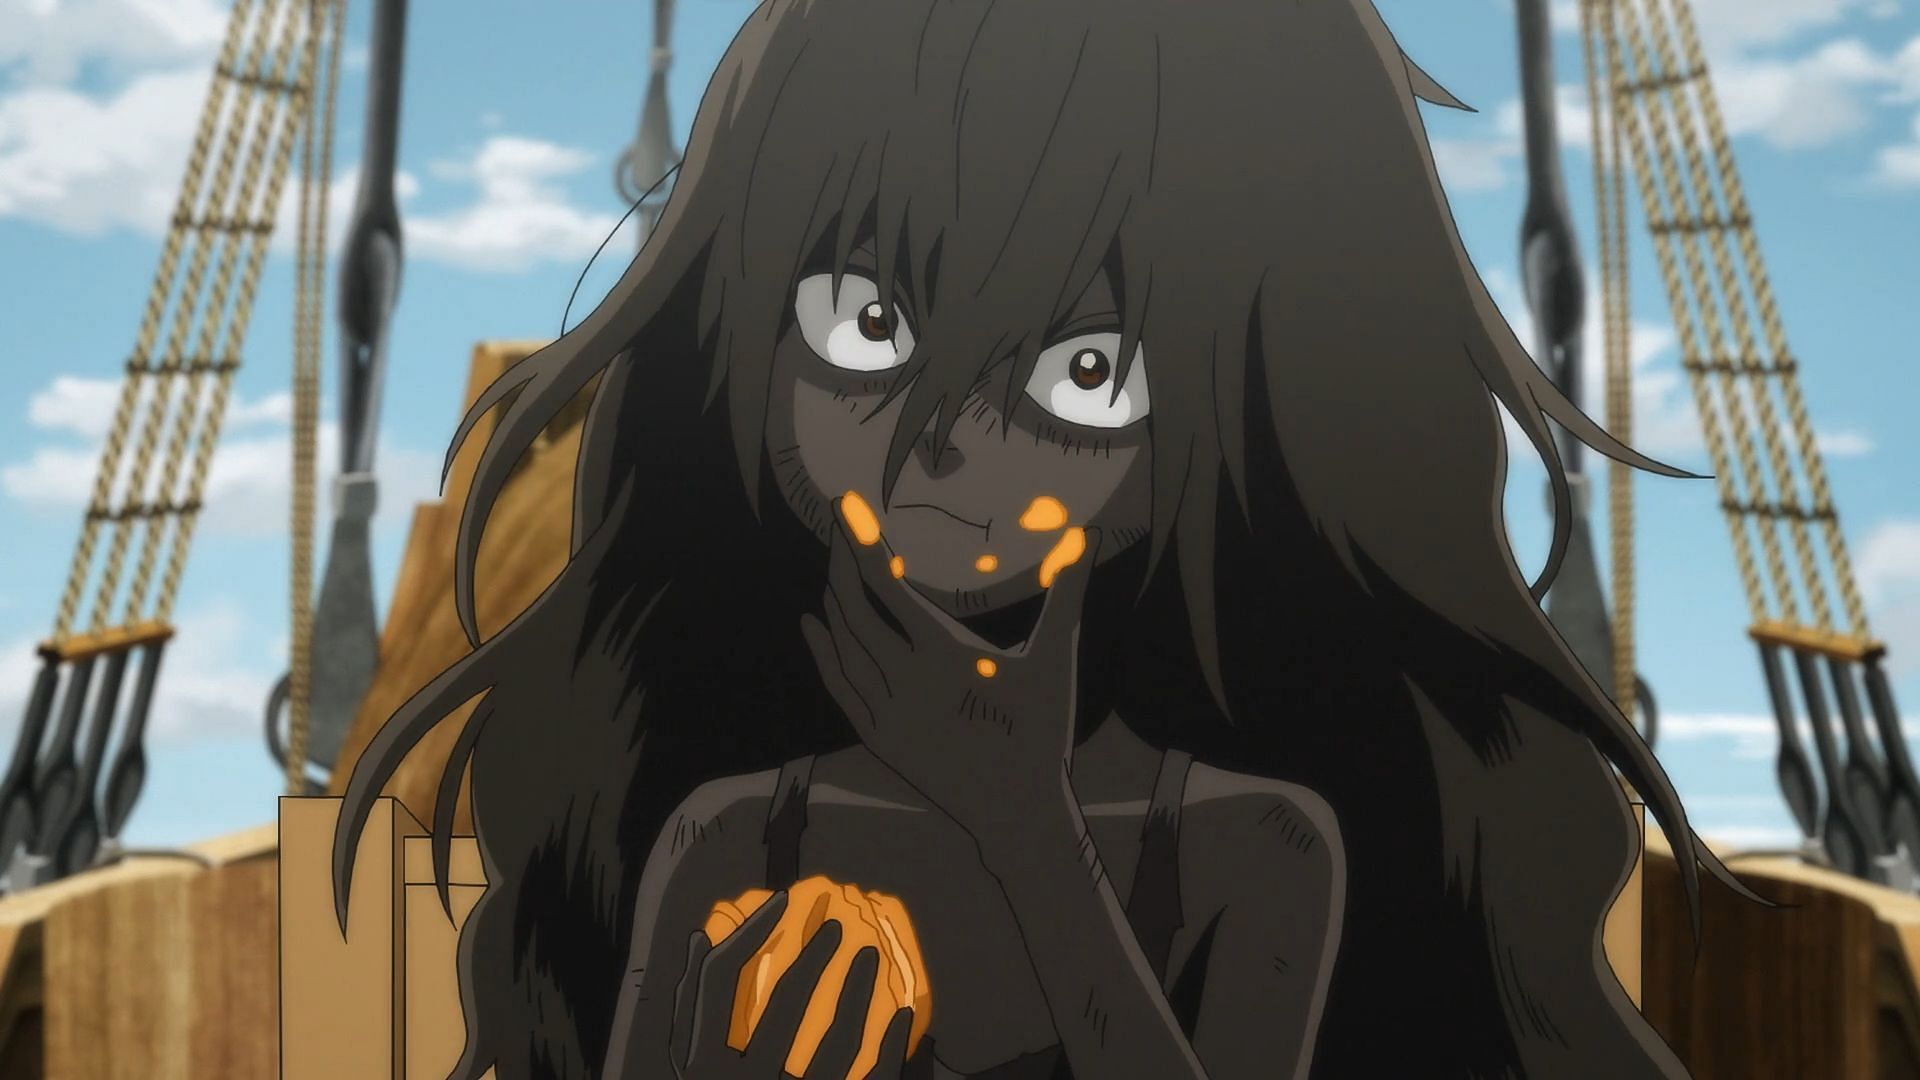 Eko as seen in the anime (Image via Studio Drive)